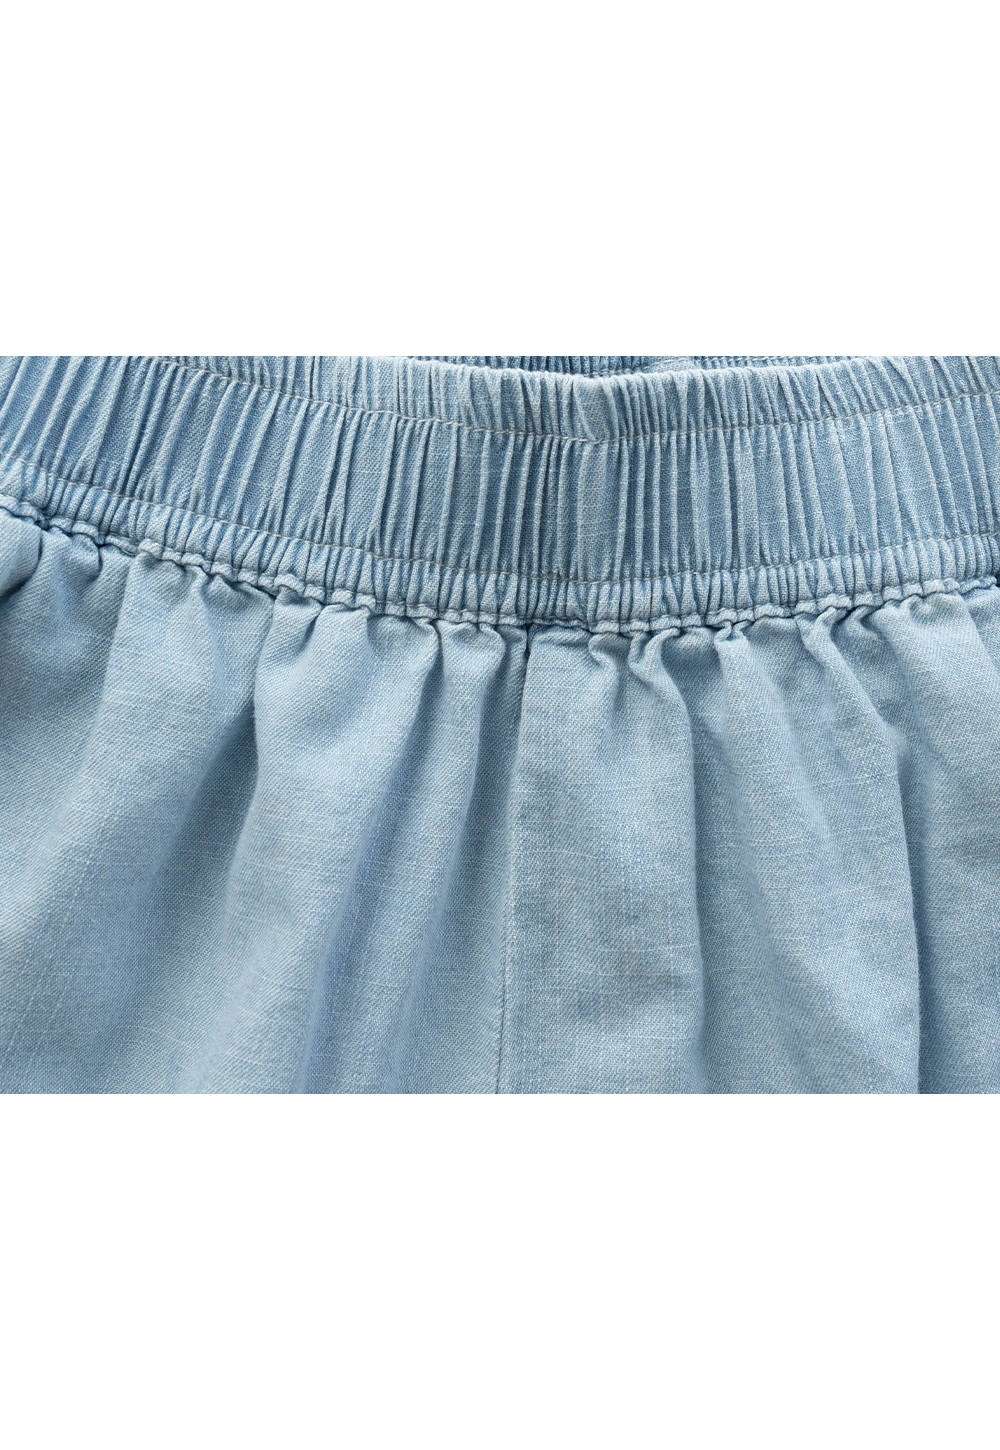 Women's Two-Piece Denim Button-Down Shirt and Shorts Set